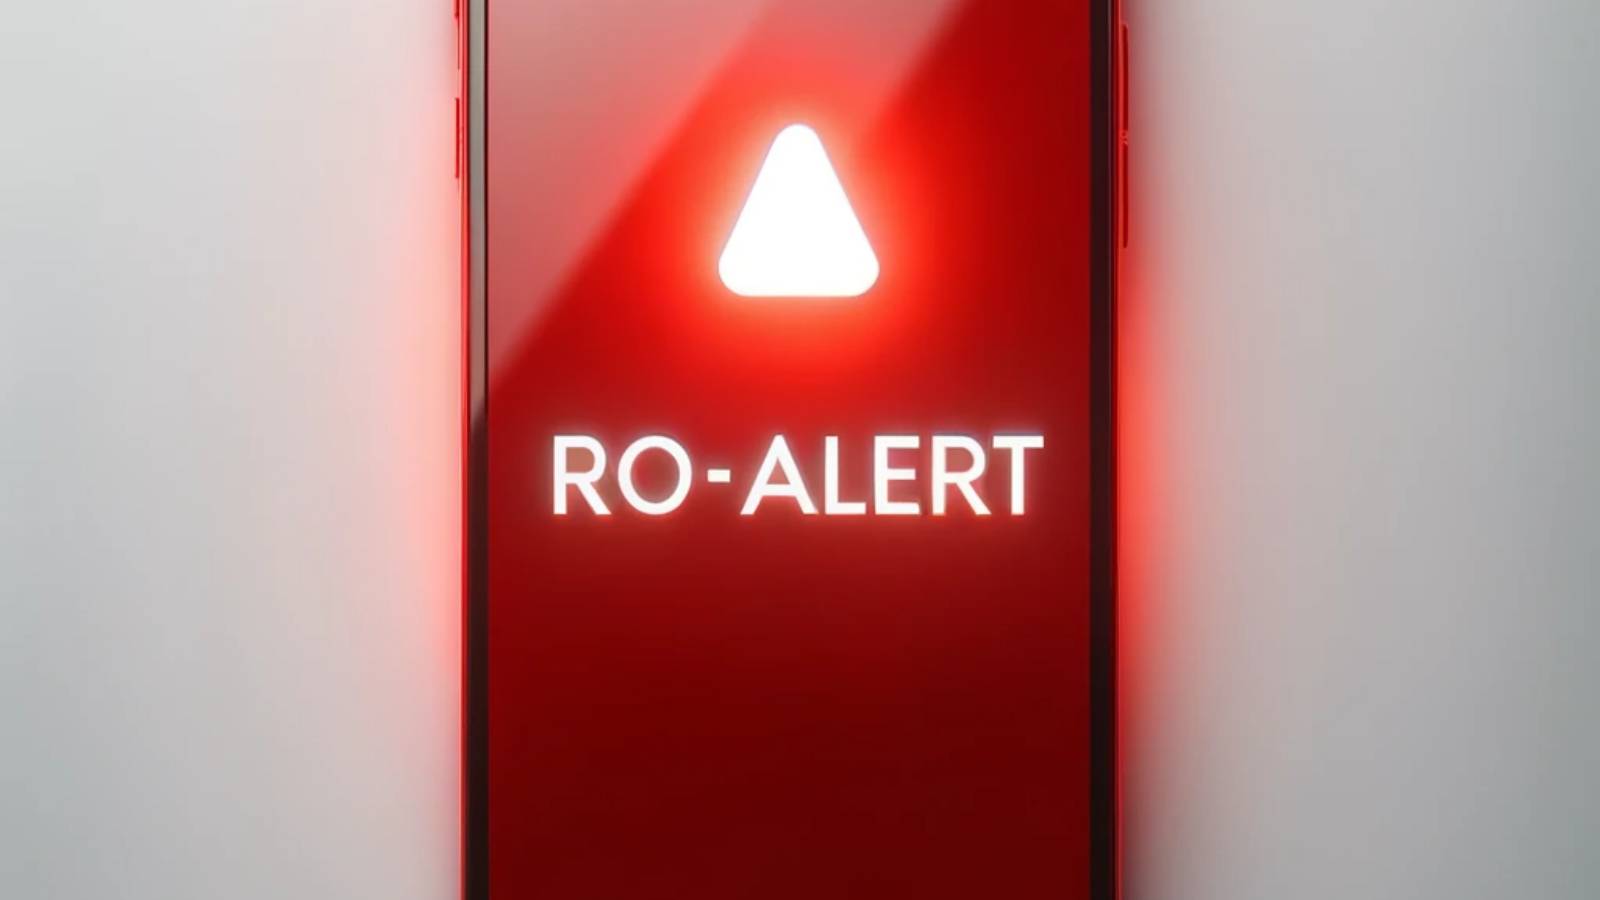 alerte ro-alert urgence tulcea drone russie